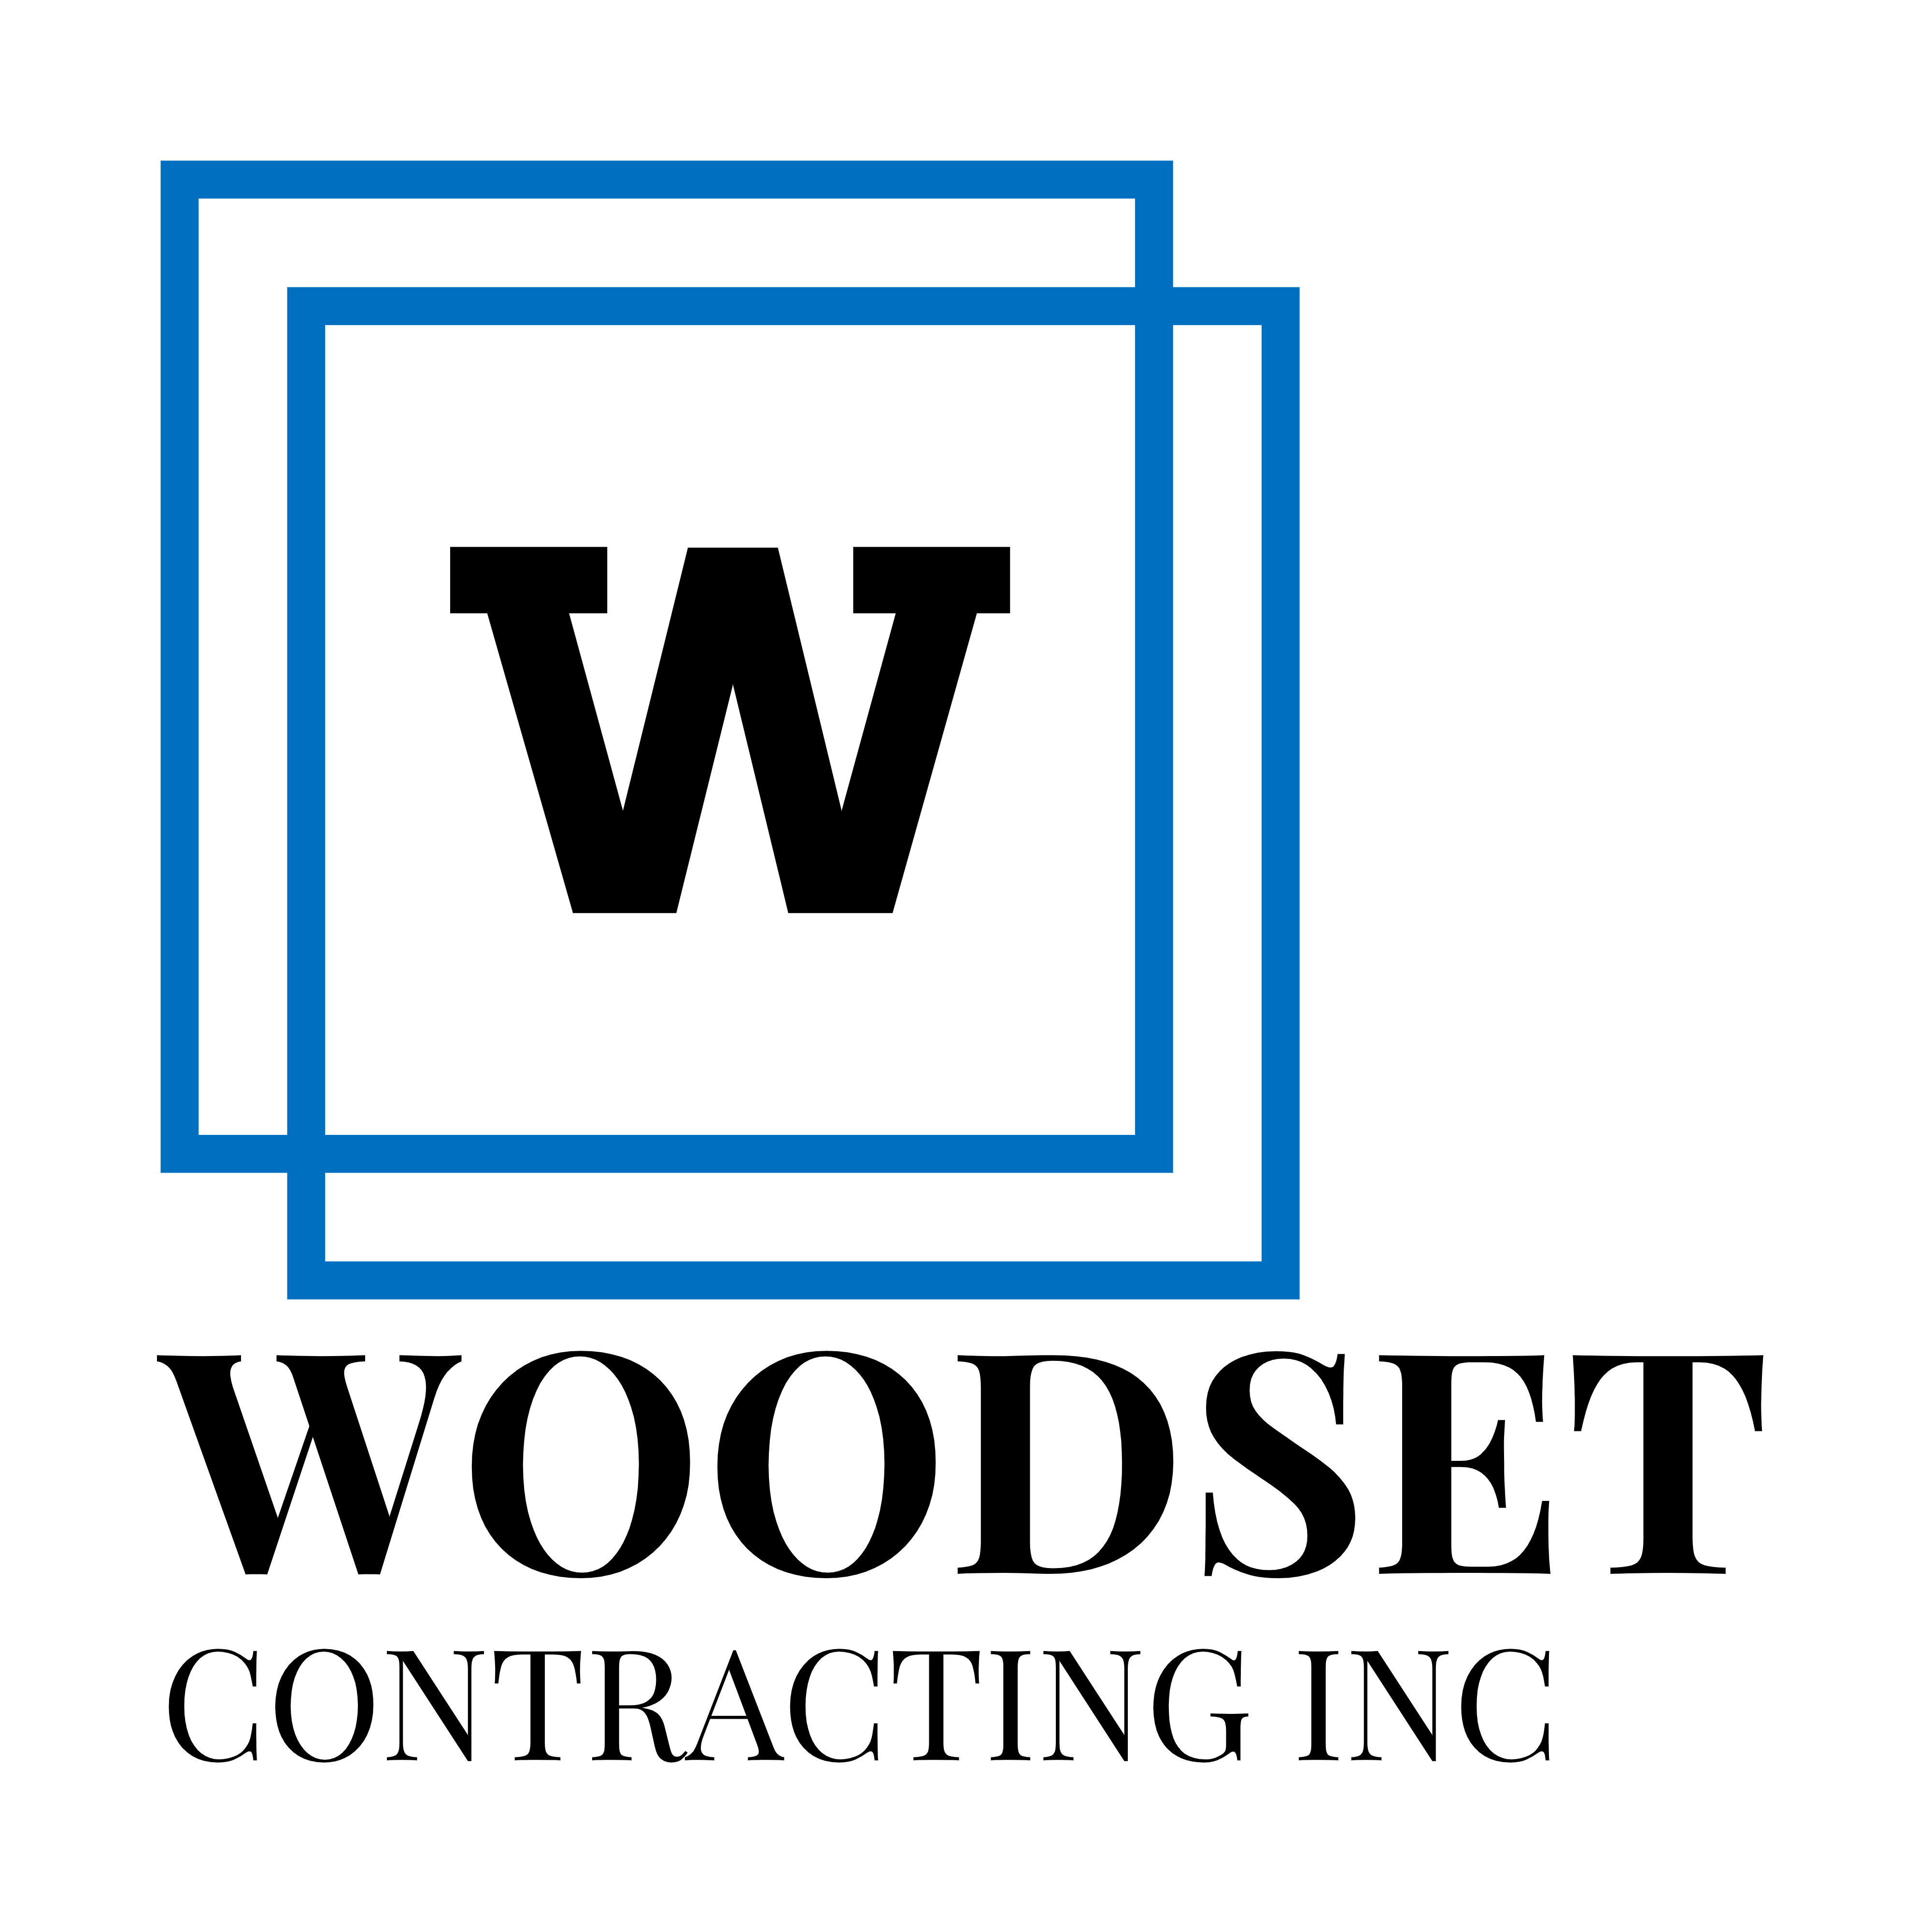 Woodset Contracting Inc's logo